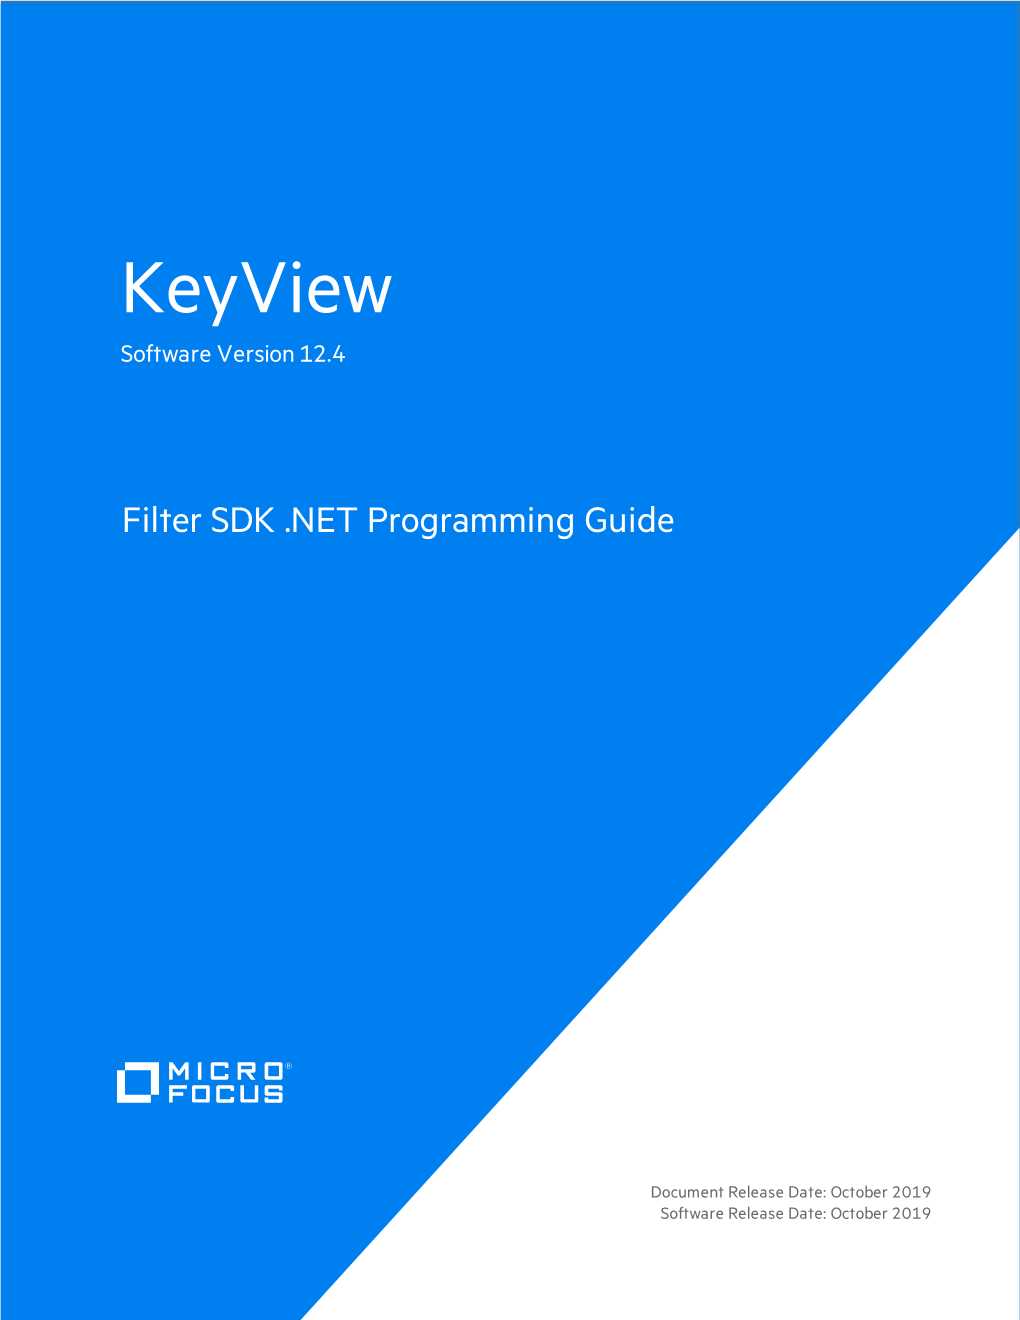 IDOL Keyview Filter SDK 12.4 .NET Programming Guide